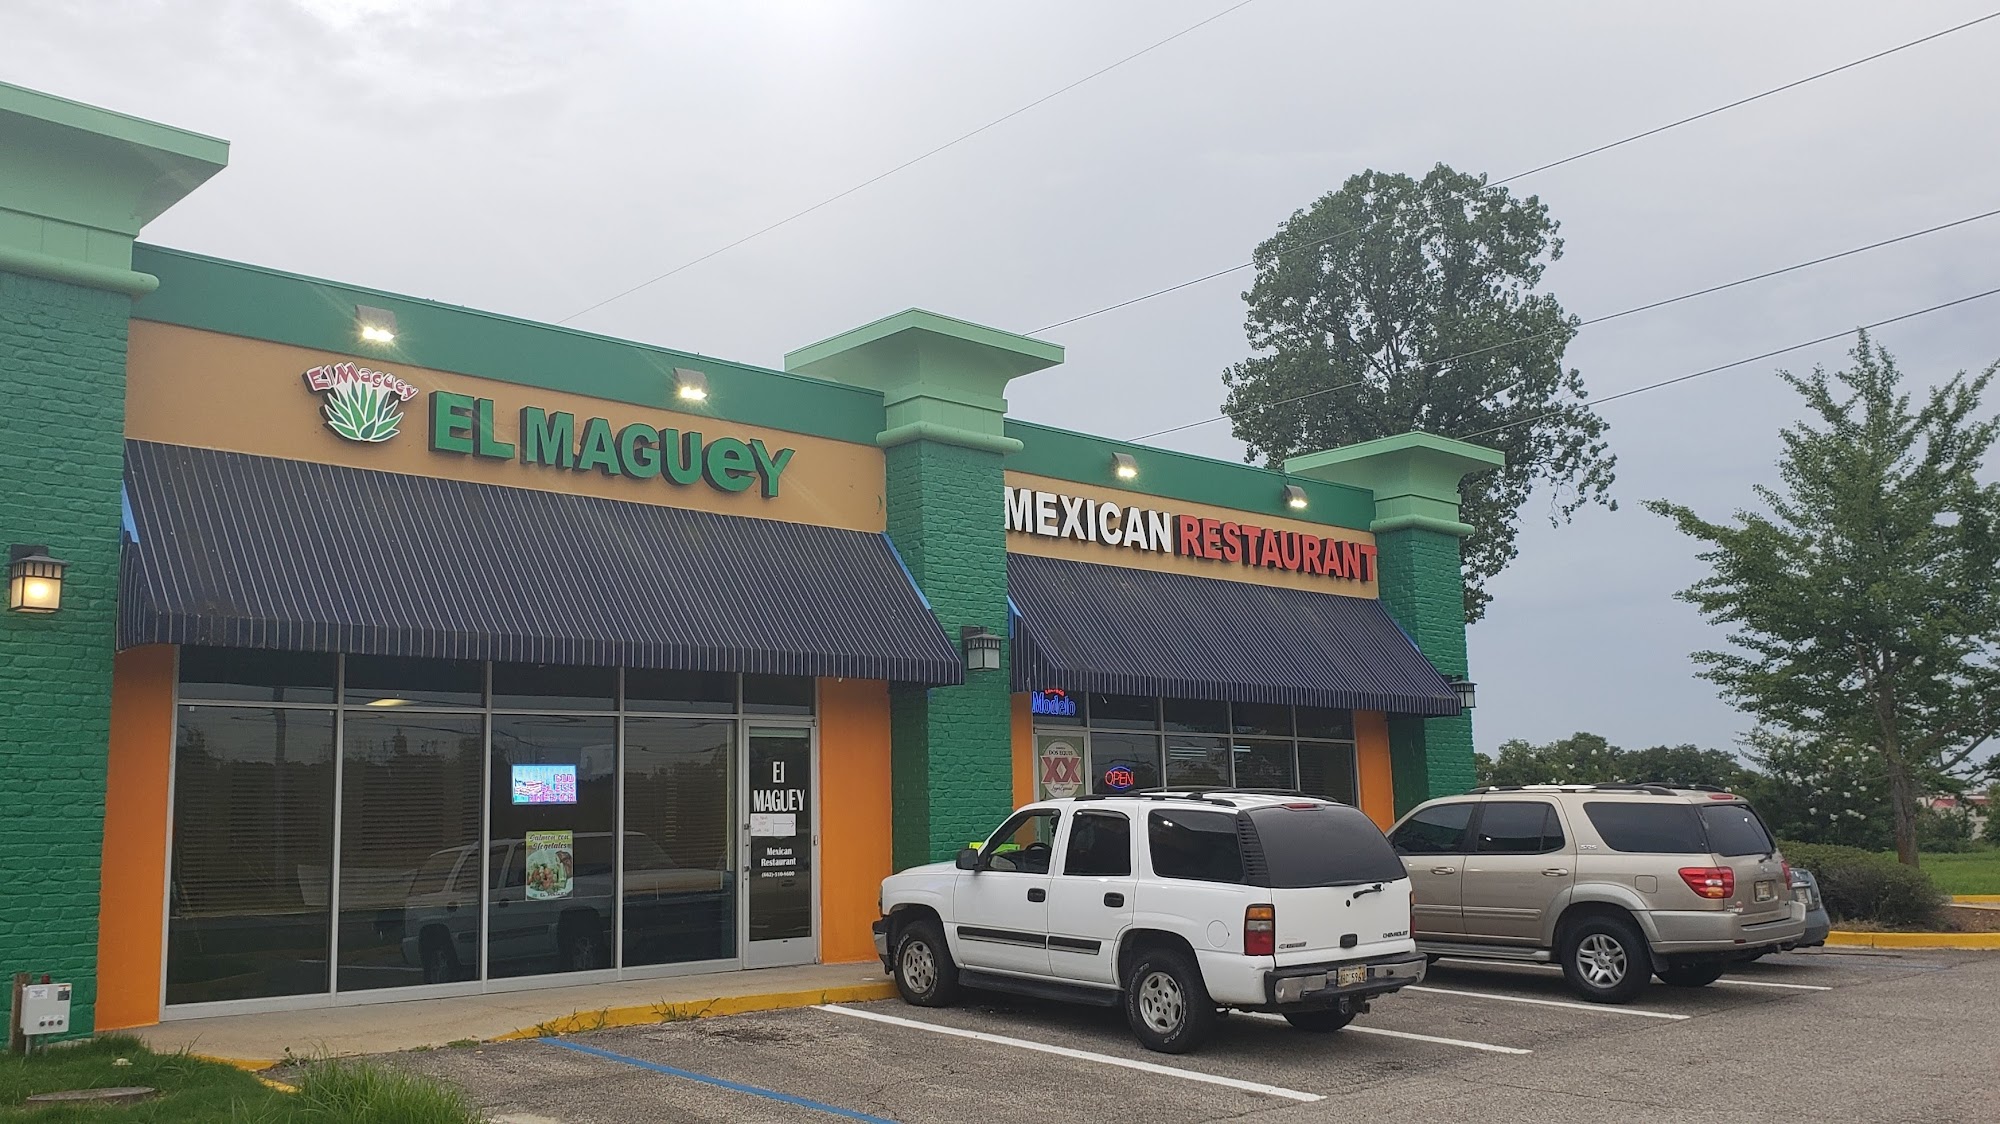 El maguey Mexican restaurant